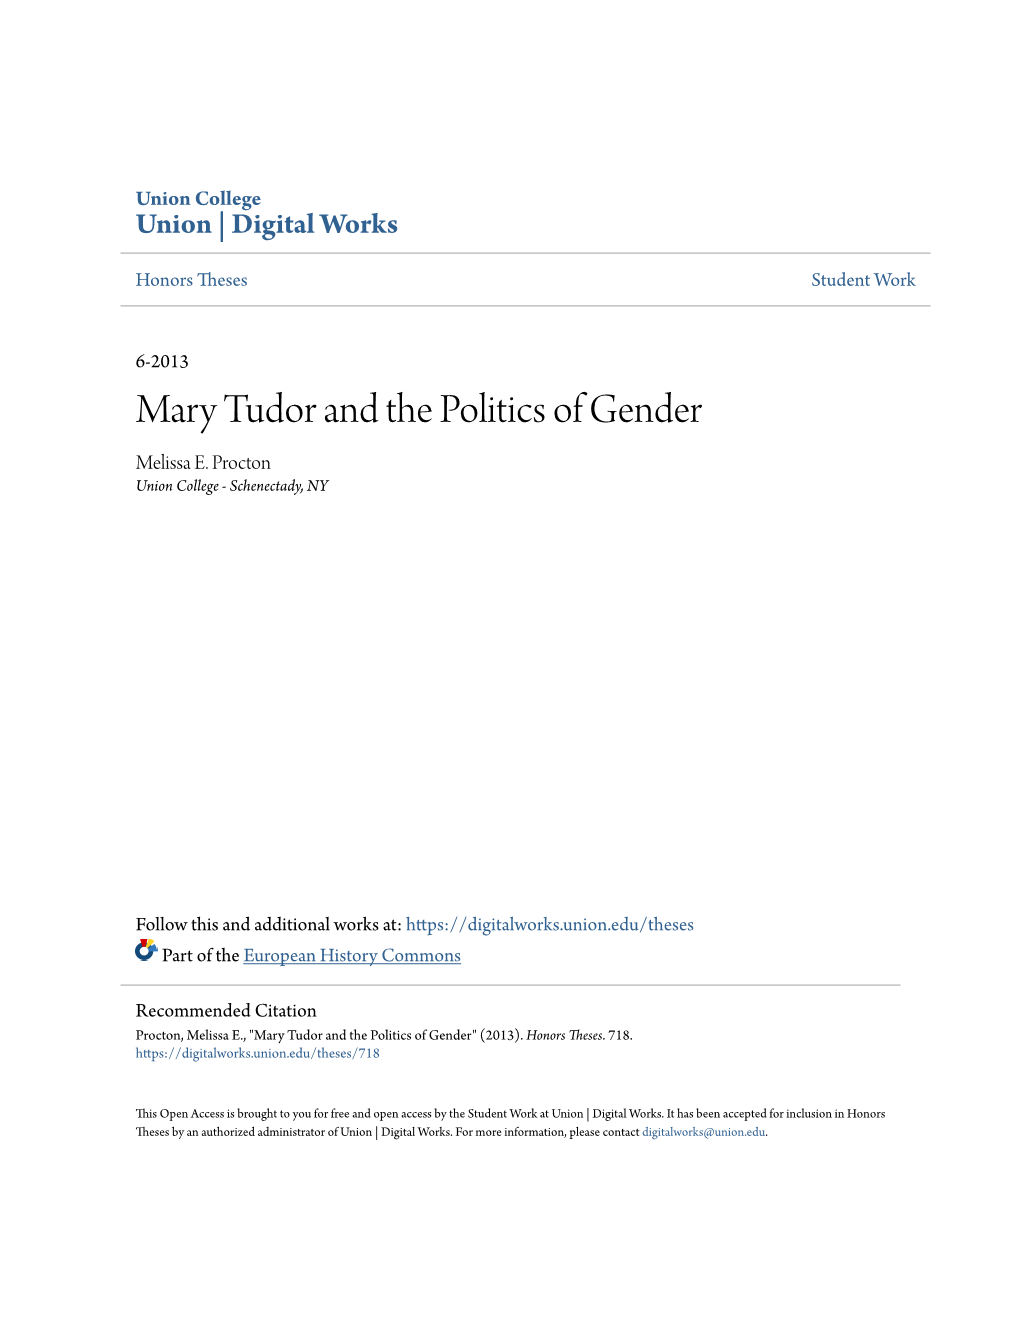 Mary Tudor and the Politics of Gender Melissa E